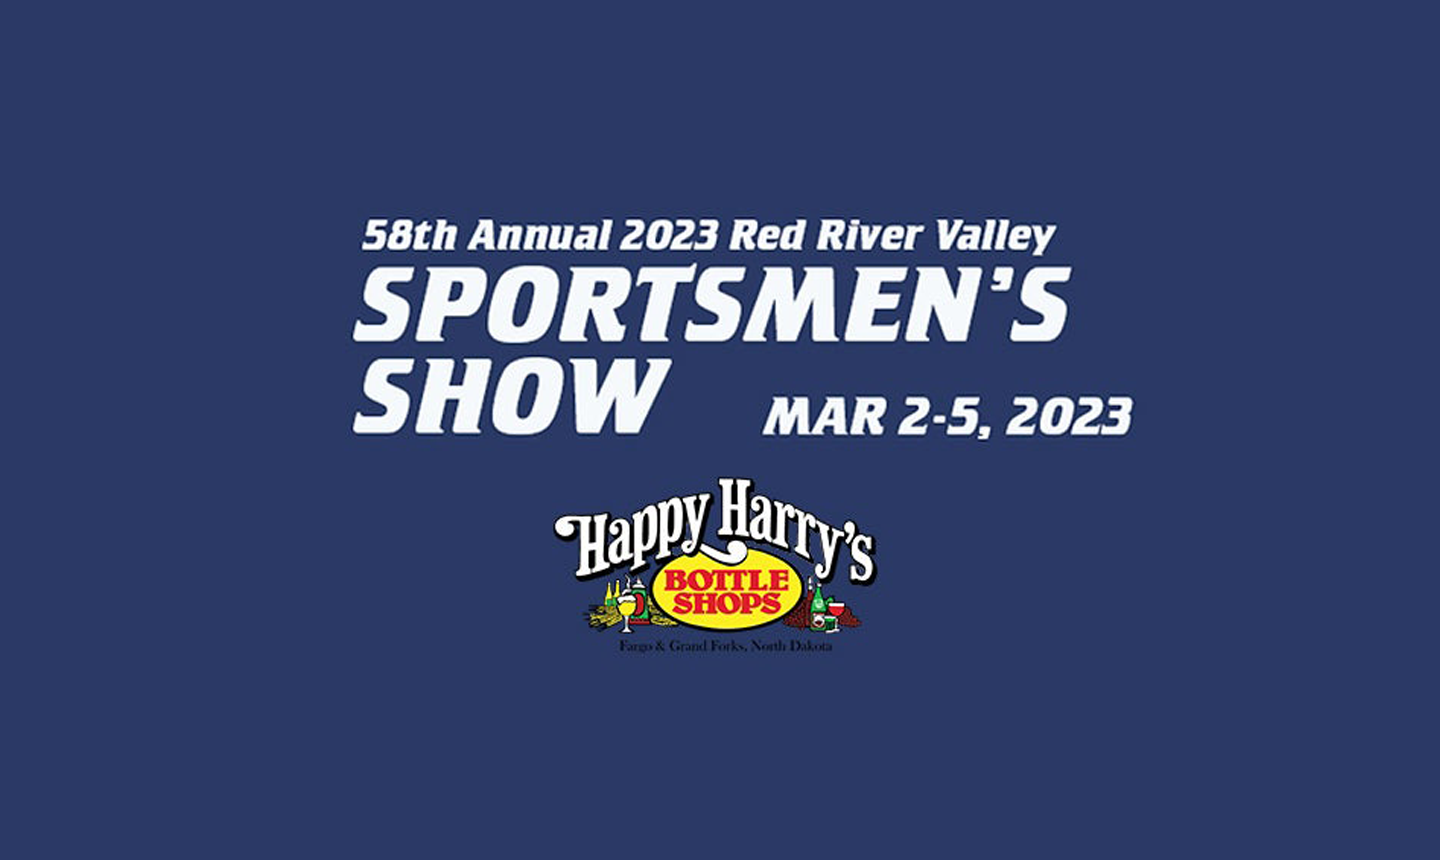 Red River Valley Sportsmen's Show